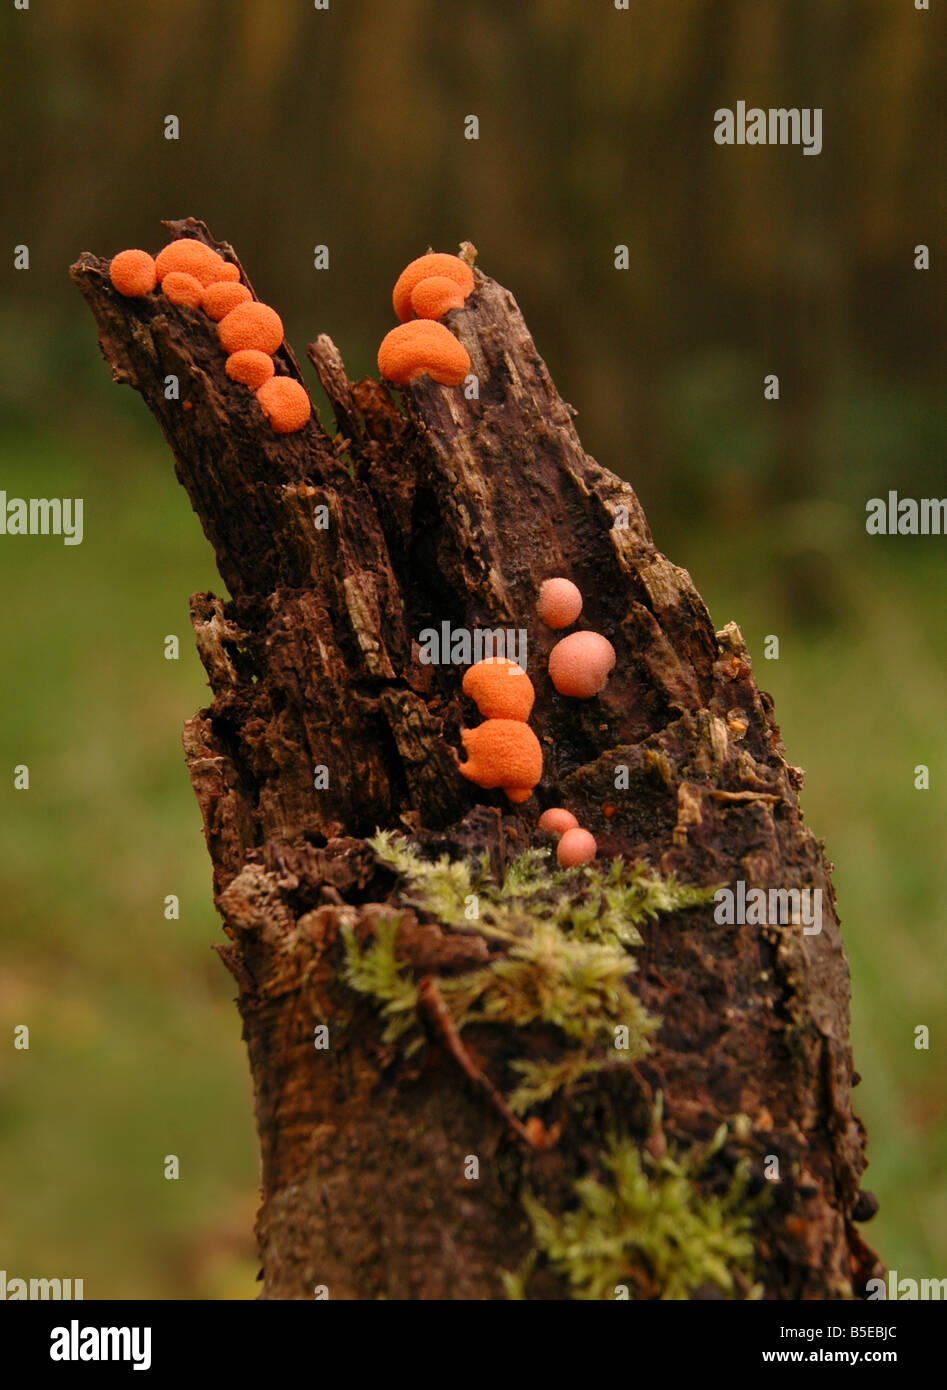 Beech woodwart - Hypoxylon fragiforme  - the fungus as seen growing on dead beech wood. Stock Photo